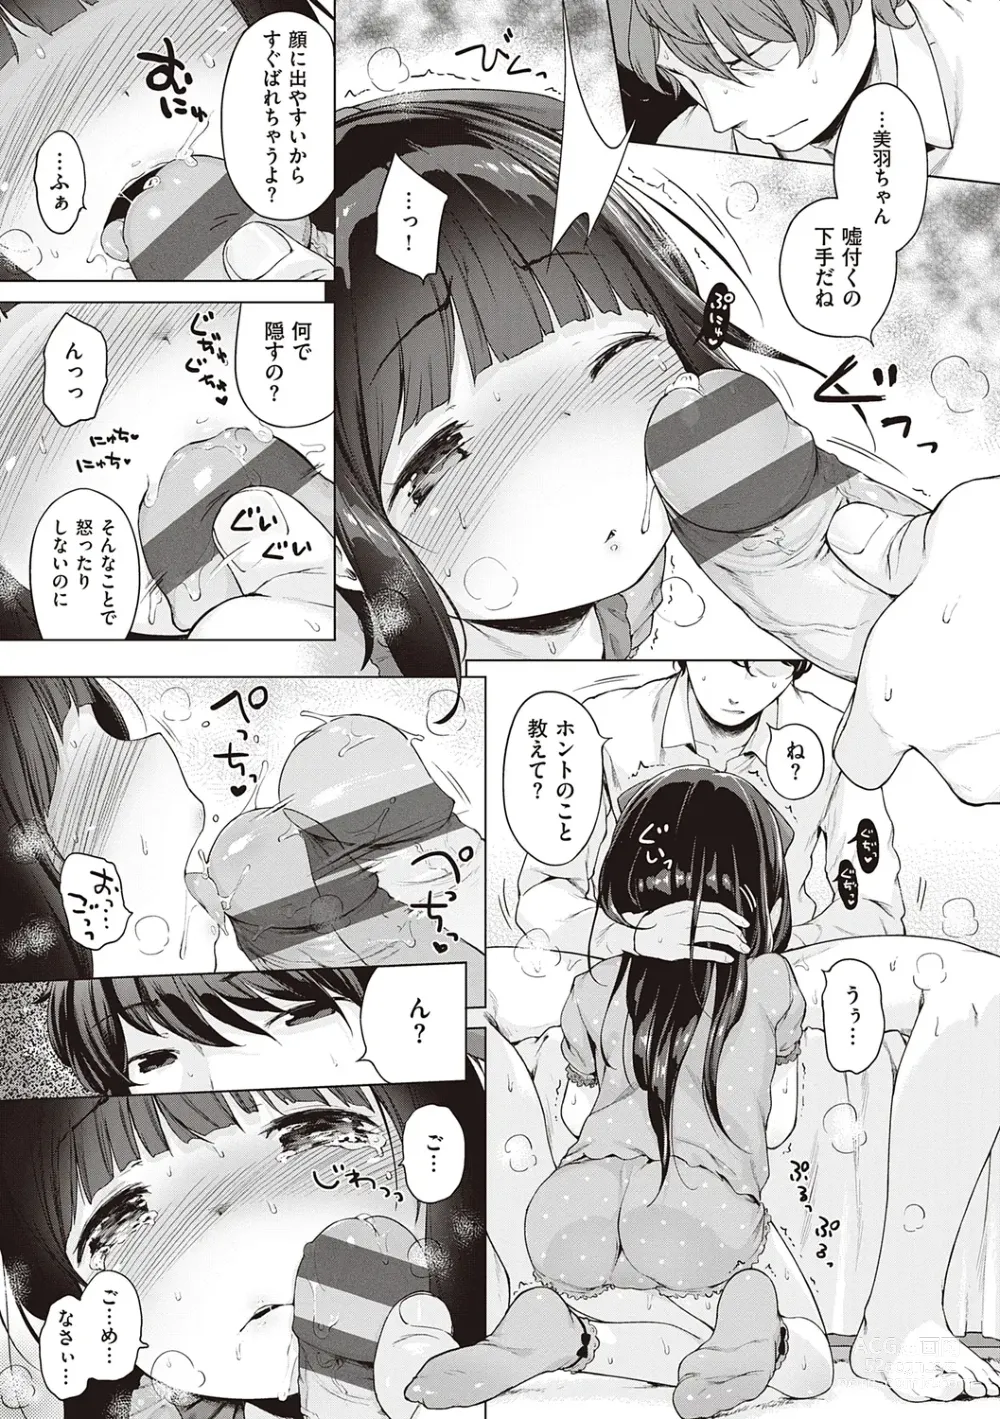 Page 37 of manga Motto! Hatsukoi Ribbon.